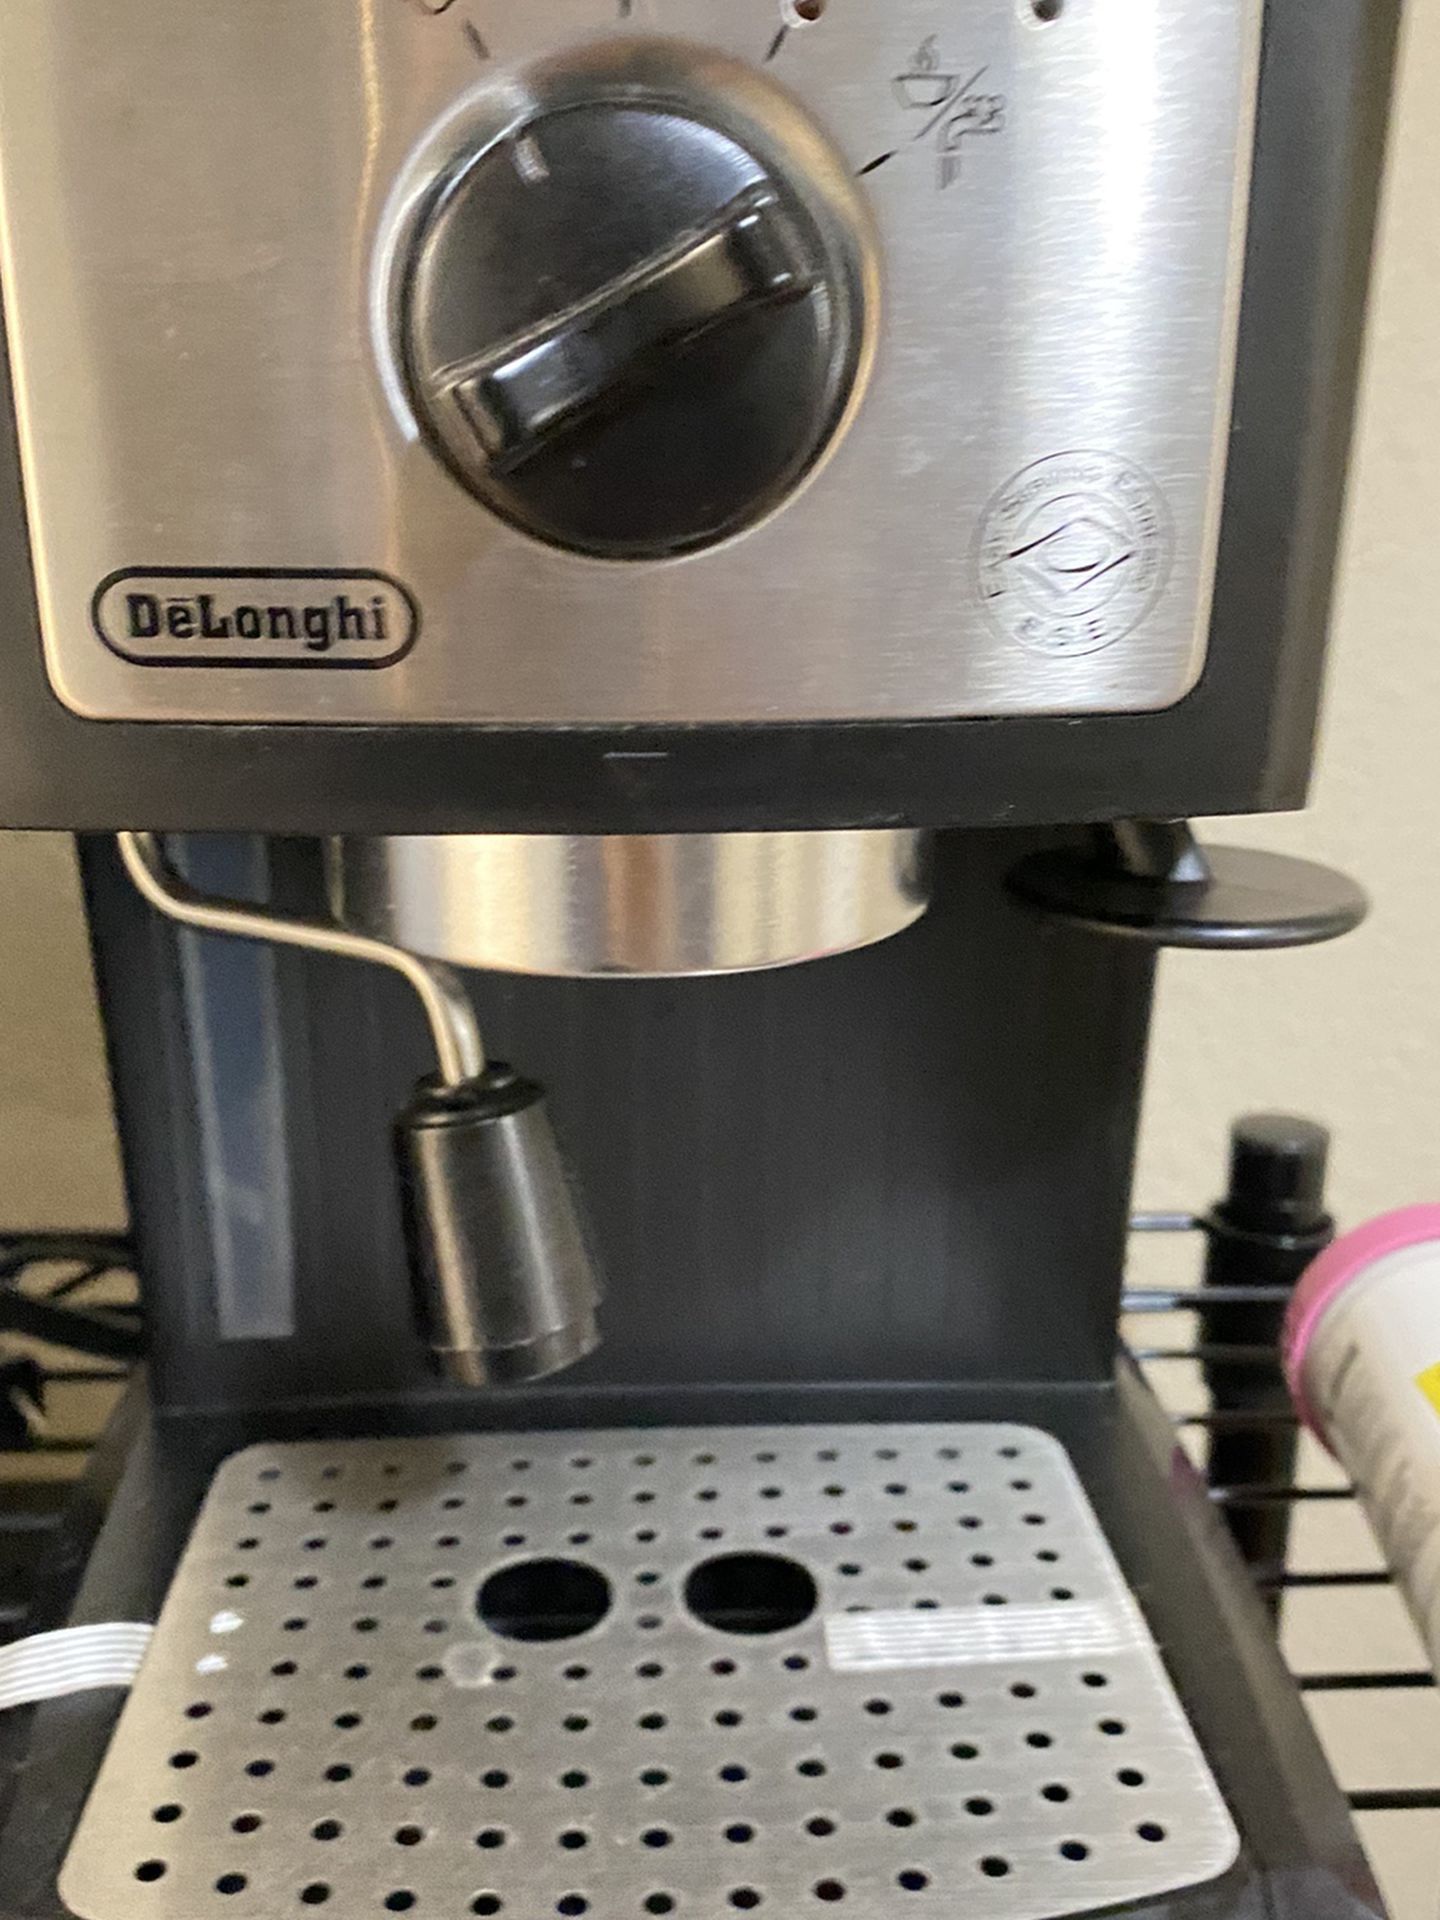 Delonghi Coffee Maker Almost New